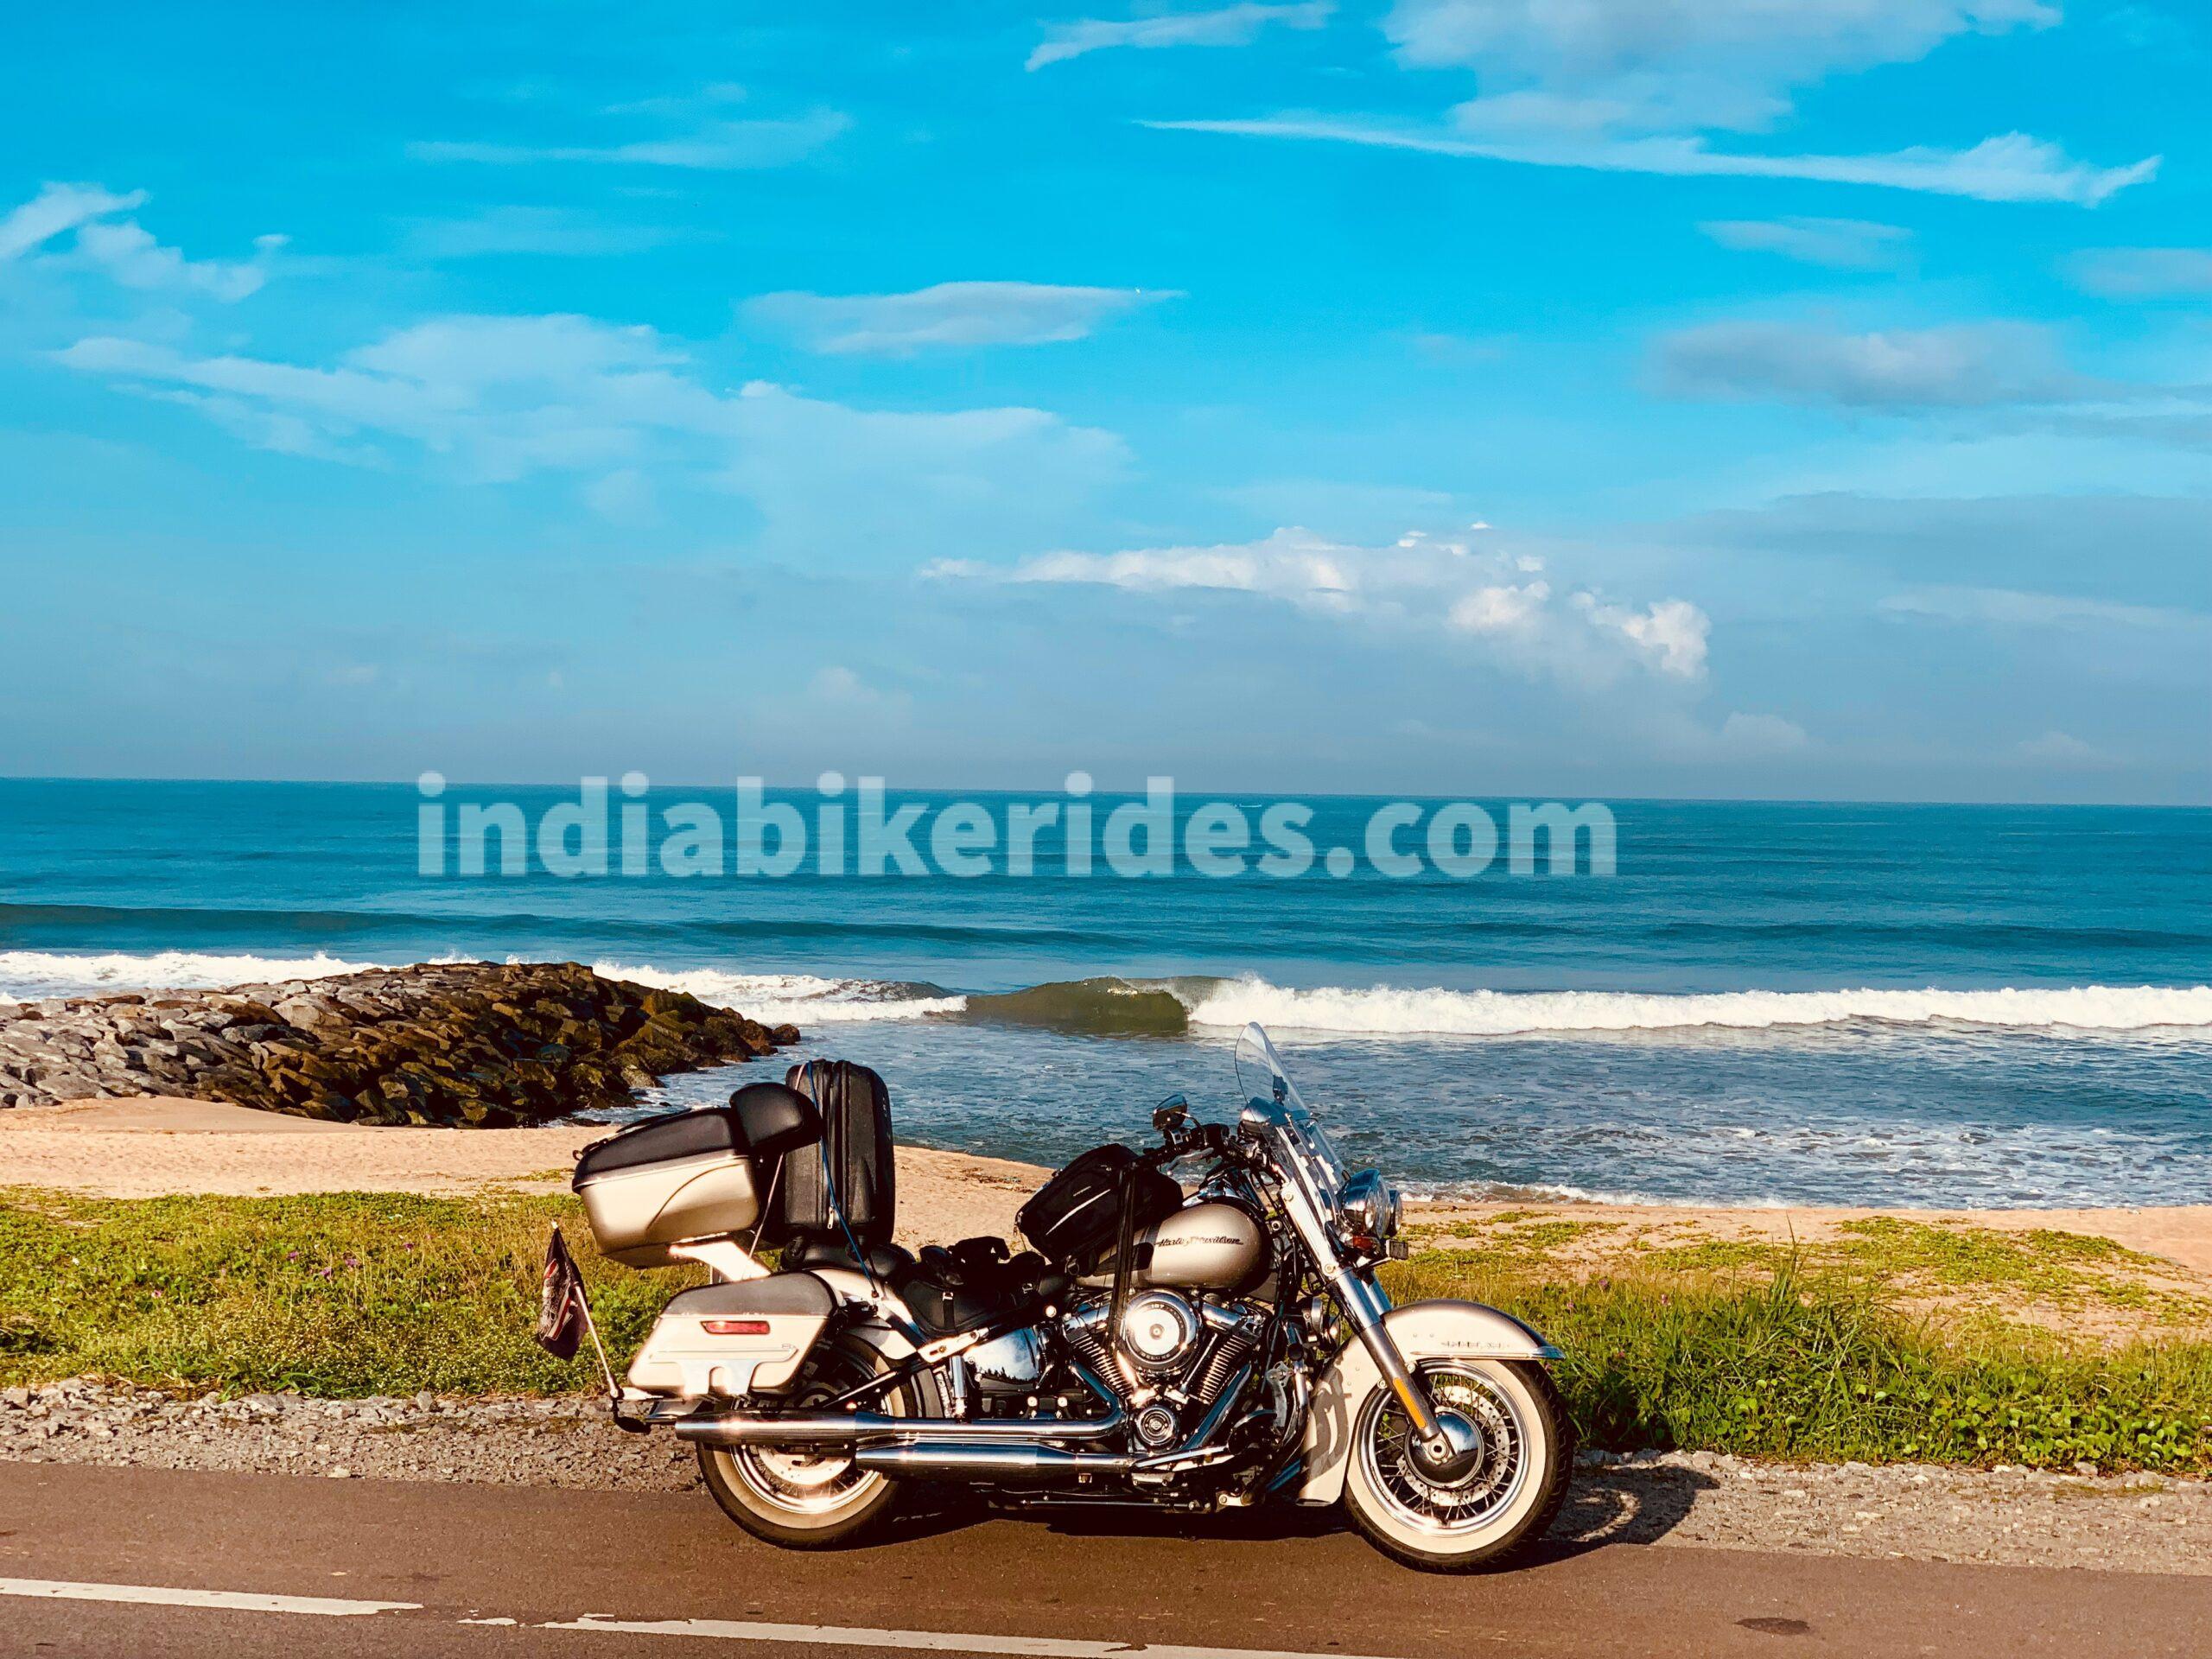 Harley Davidson, Marvanthe beach, India Bike rides